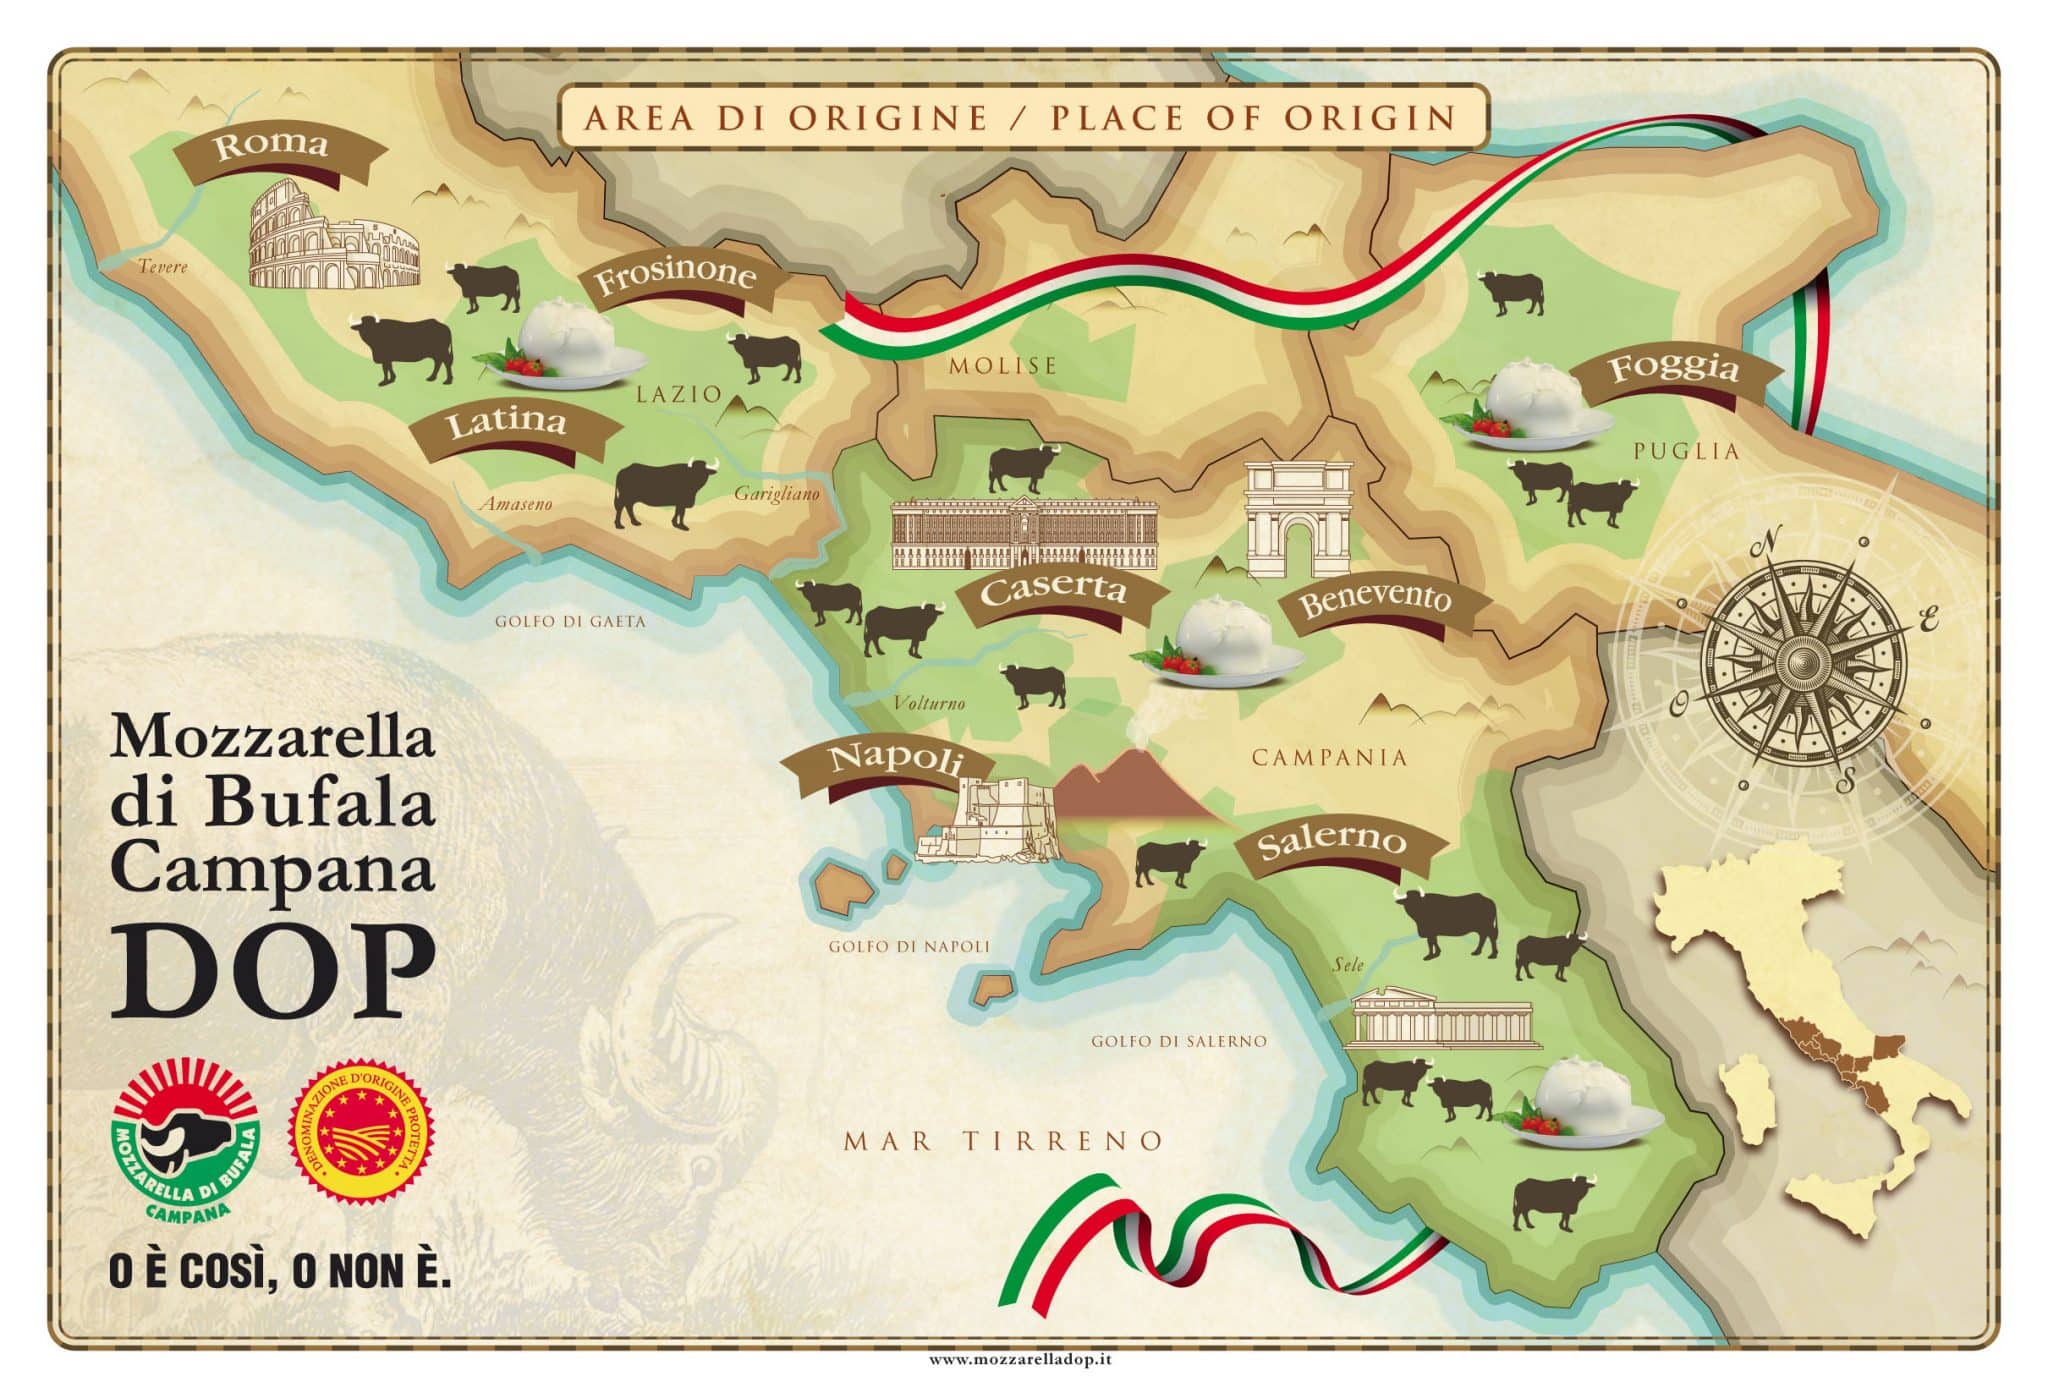 Zones de production de la mozzarella di bufala AOP